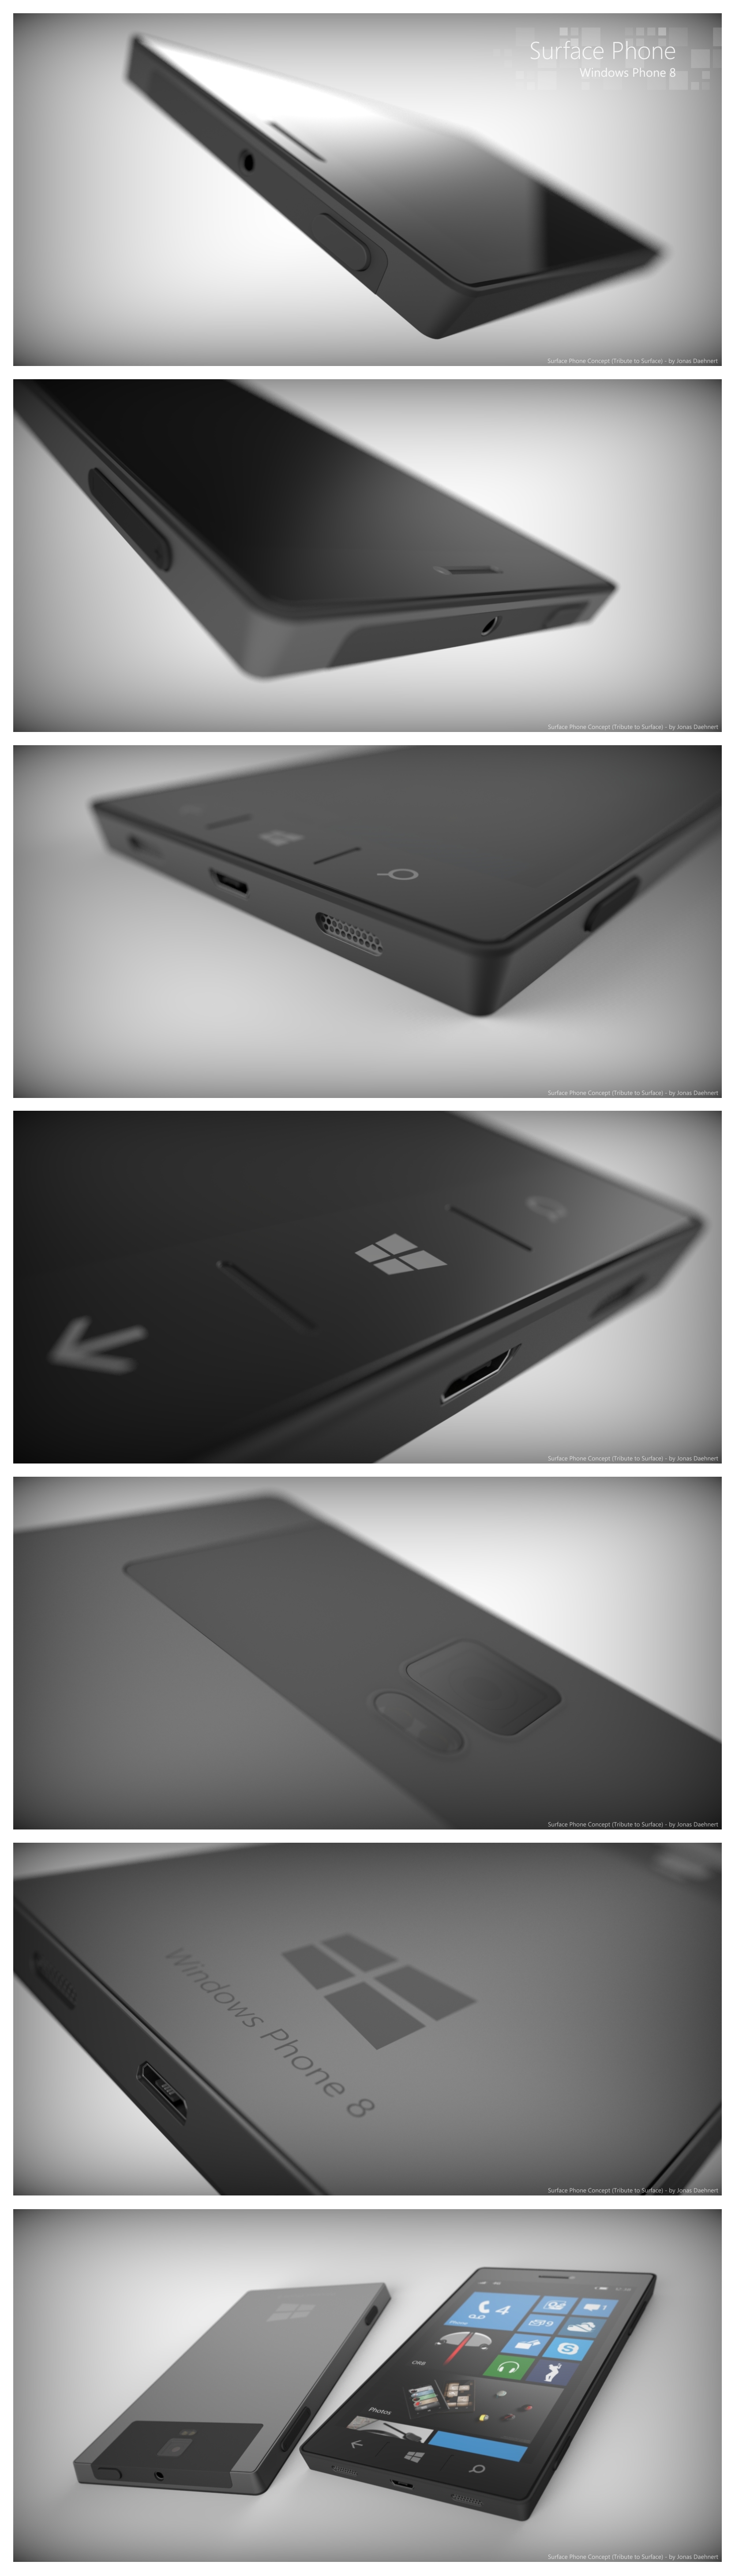 Windows 8 Surface Phone Concept [Images]